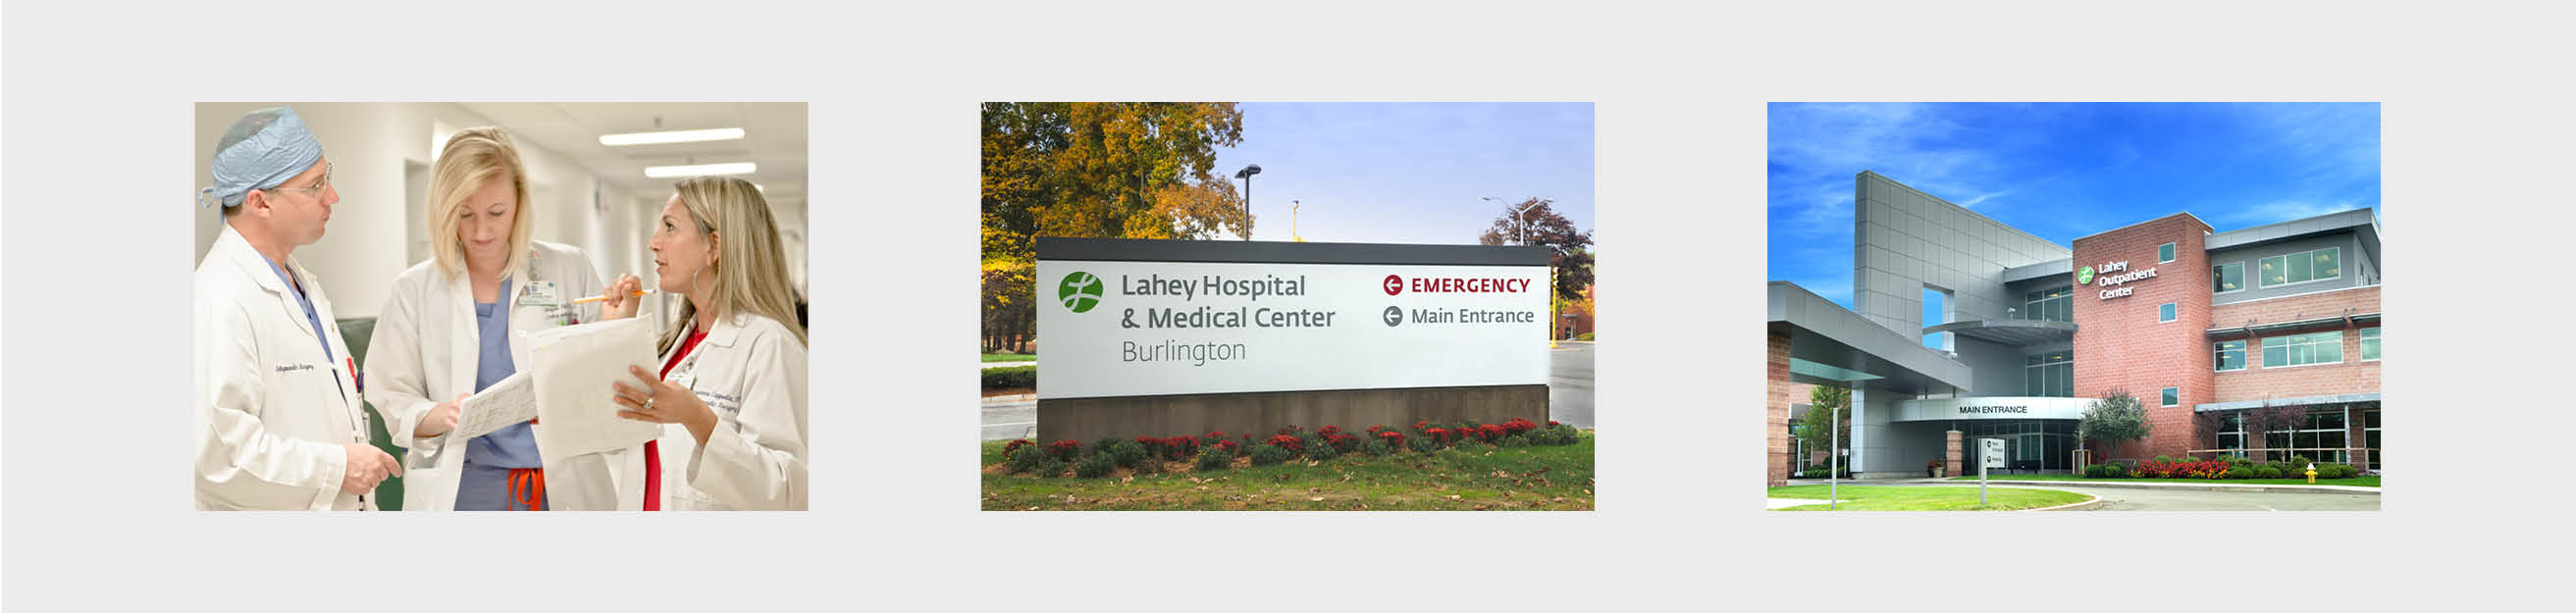 Lahey-Hospital-and-Medical-Center